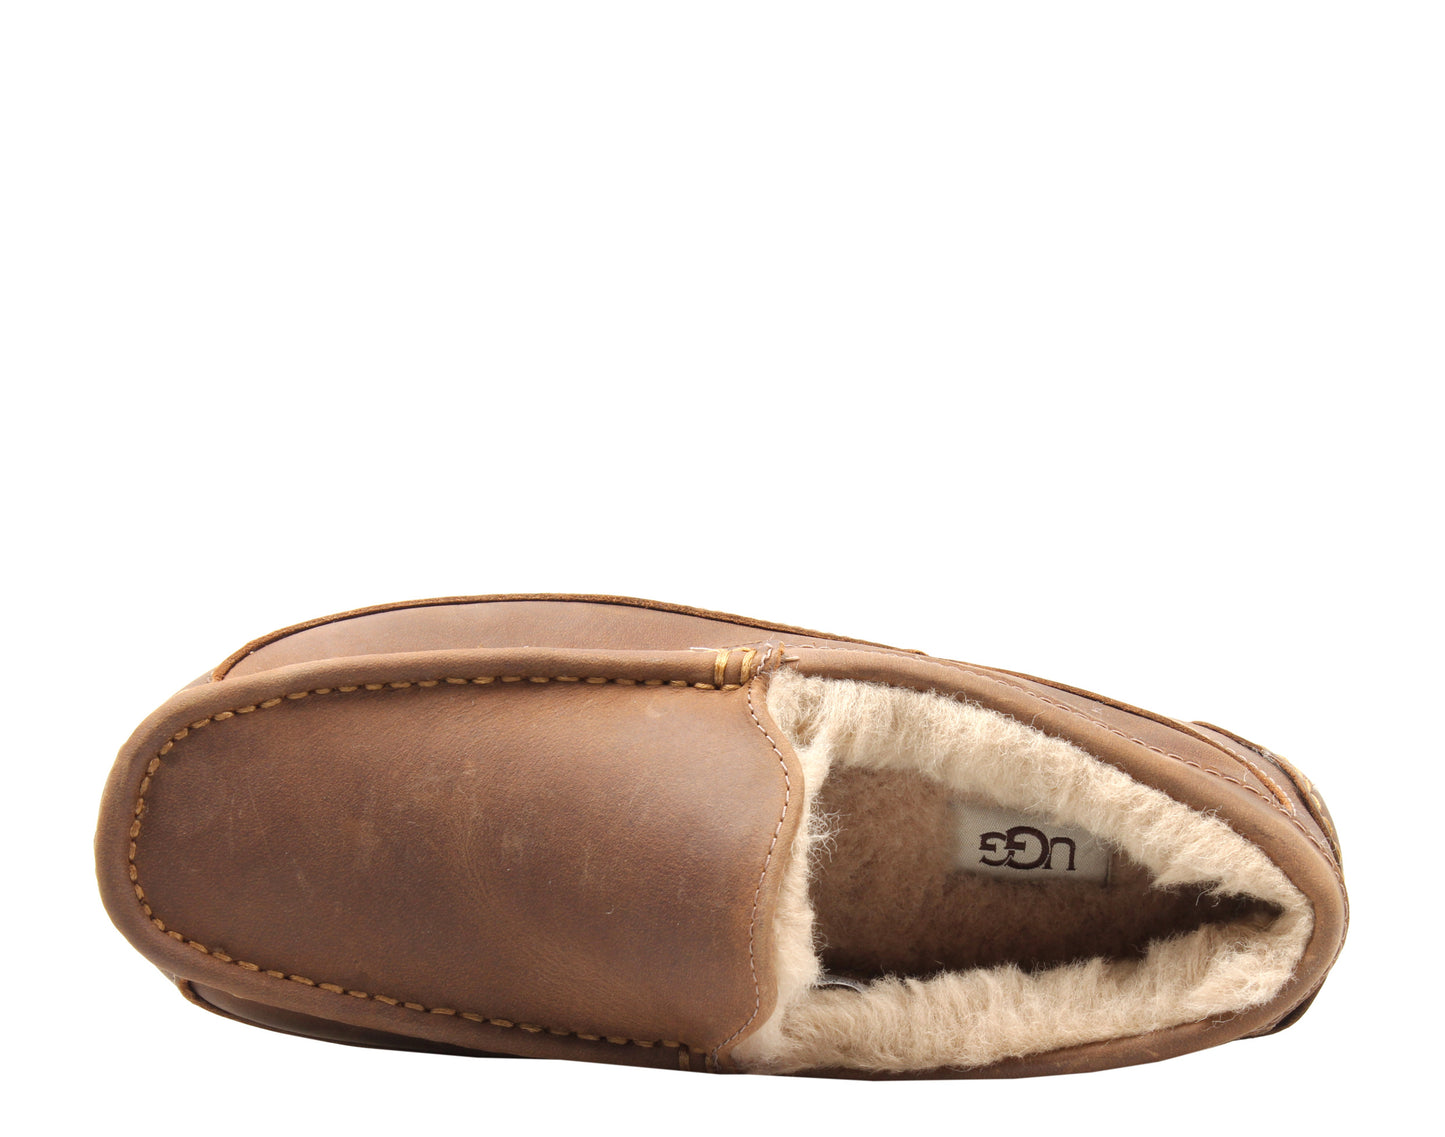 UGG Australia Ascot Leather Moccasin Tan Men's Slippers 1103889-TAN